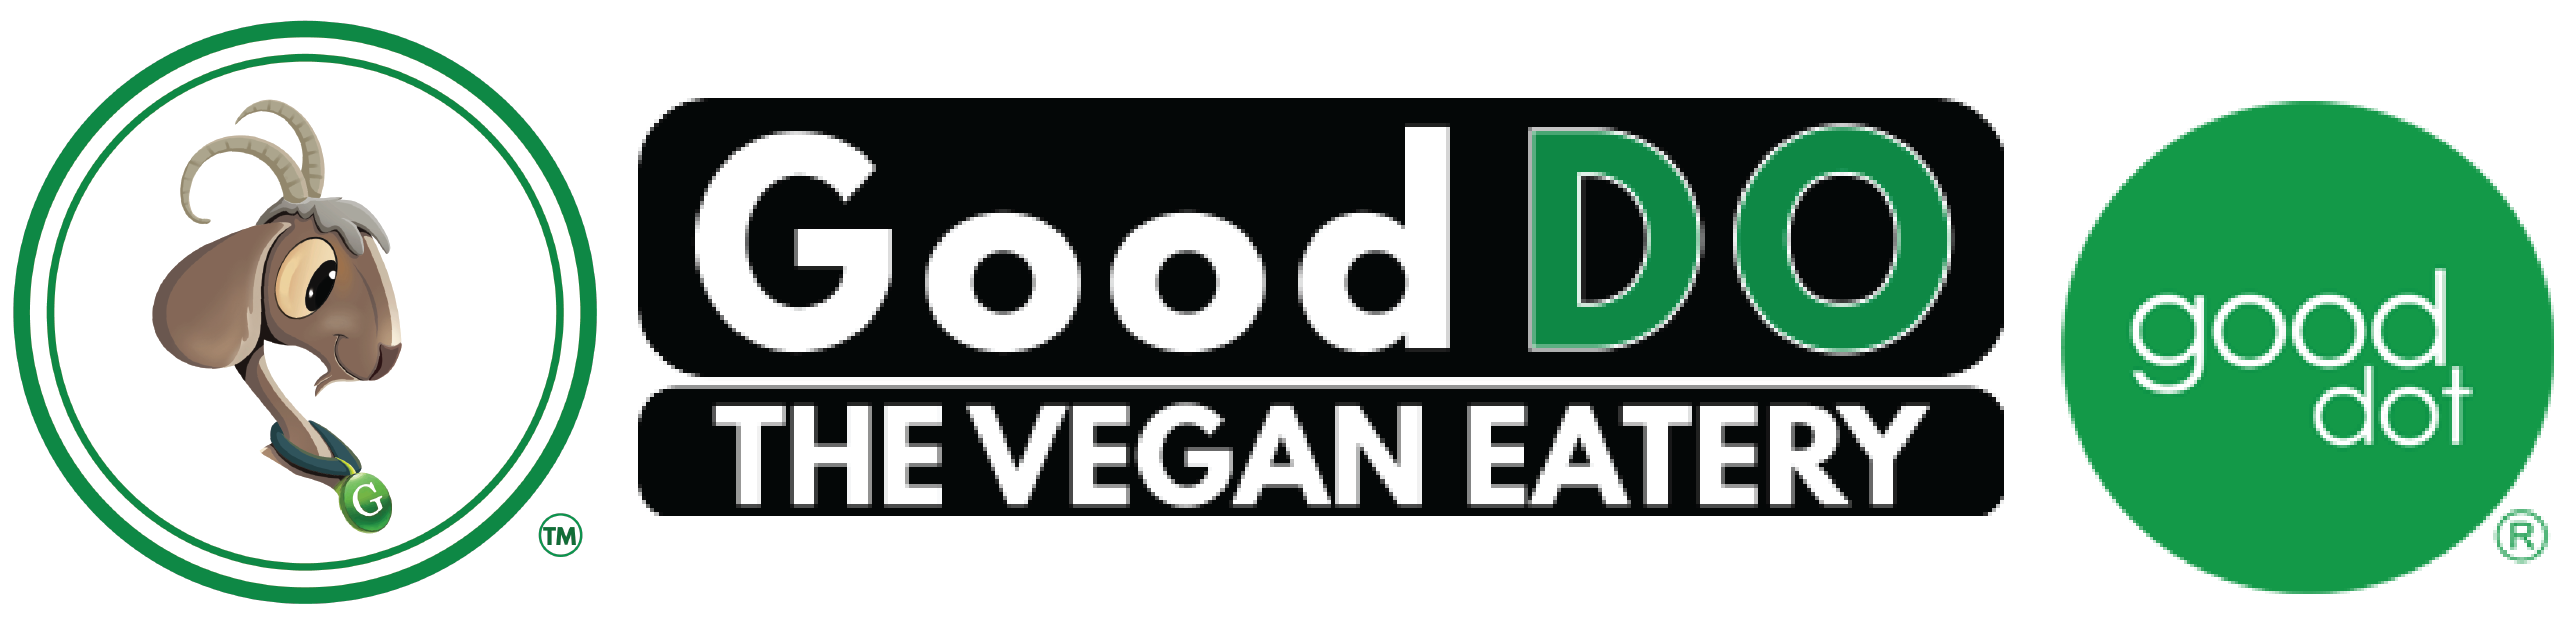 Live Animal Kill Counter | GoodDO -The Vegan Eatery